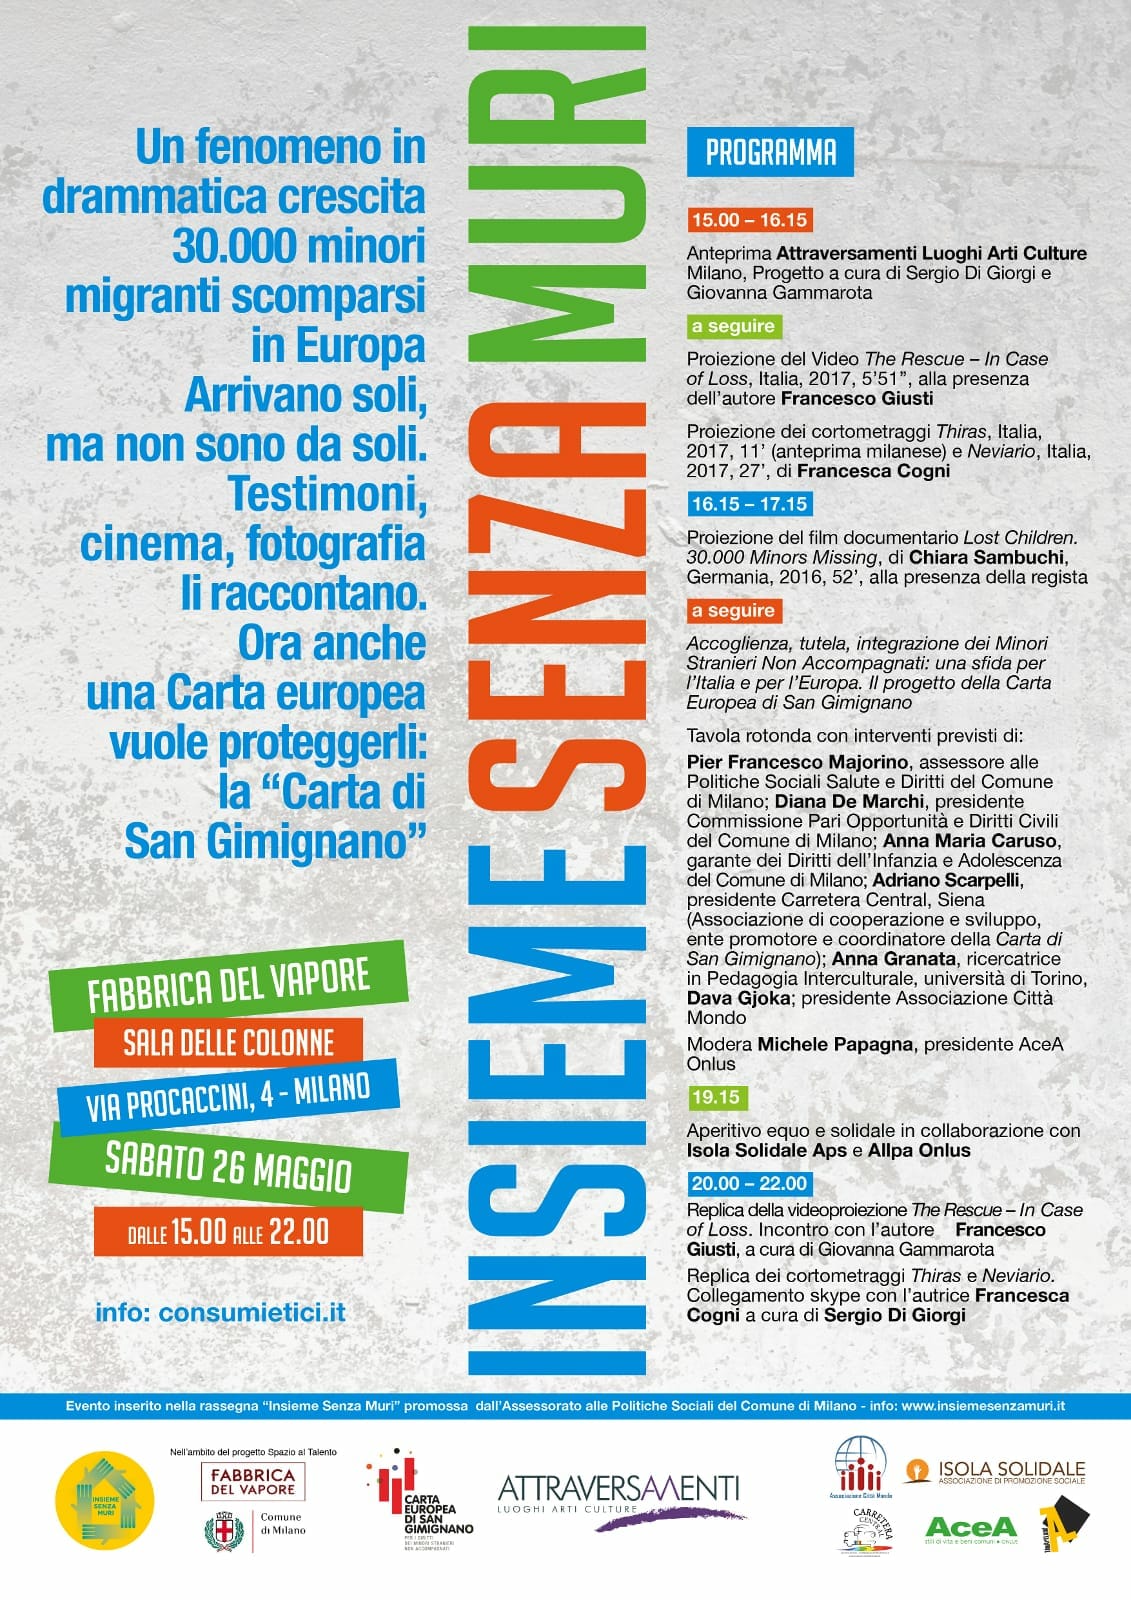 Insieme senza muri European Charter of San Gimignano program